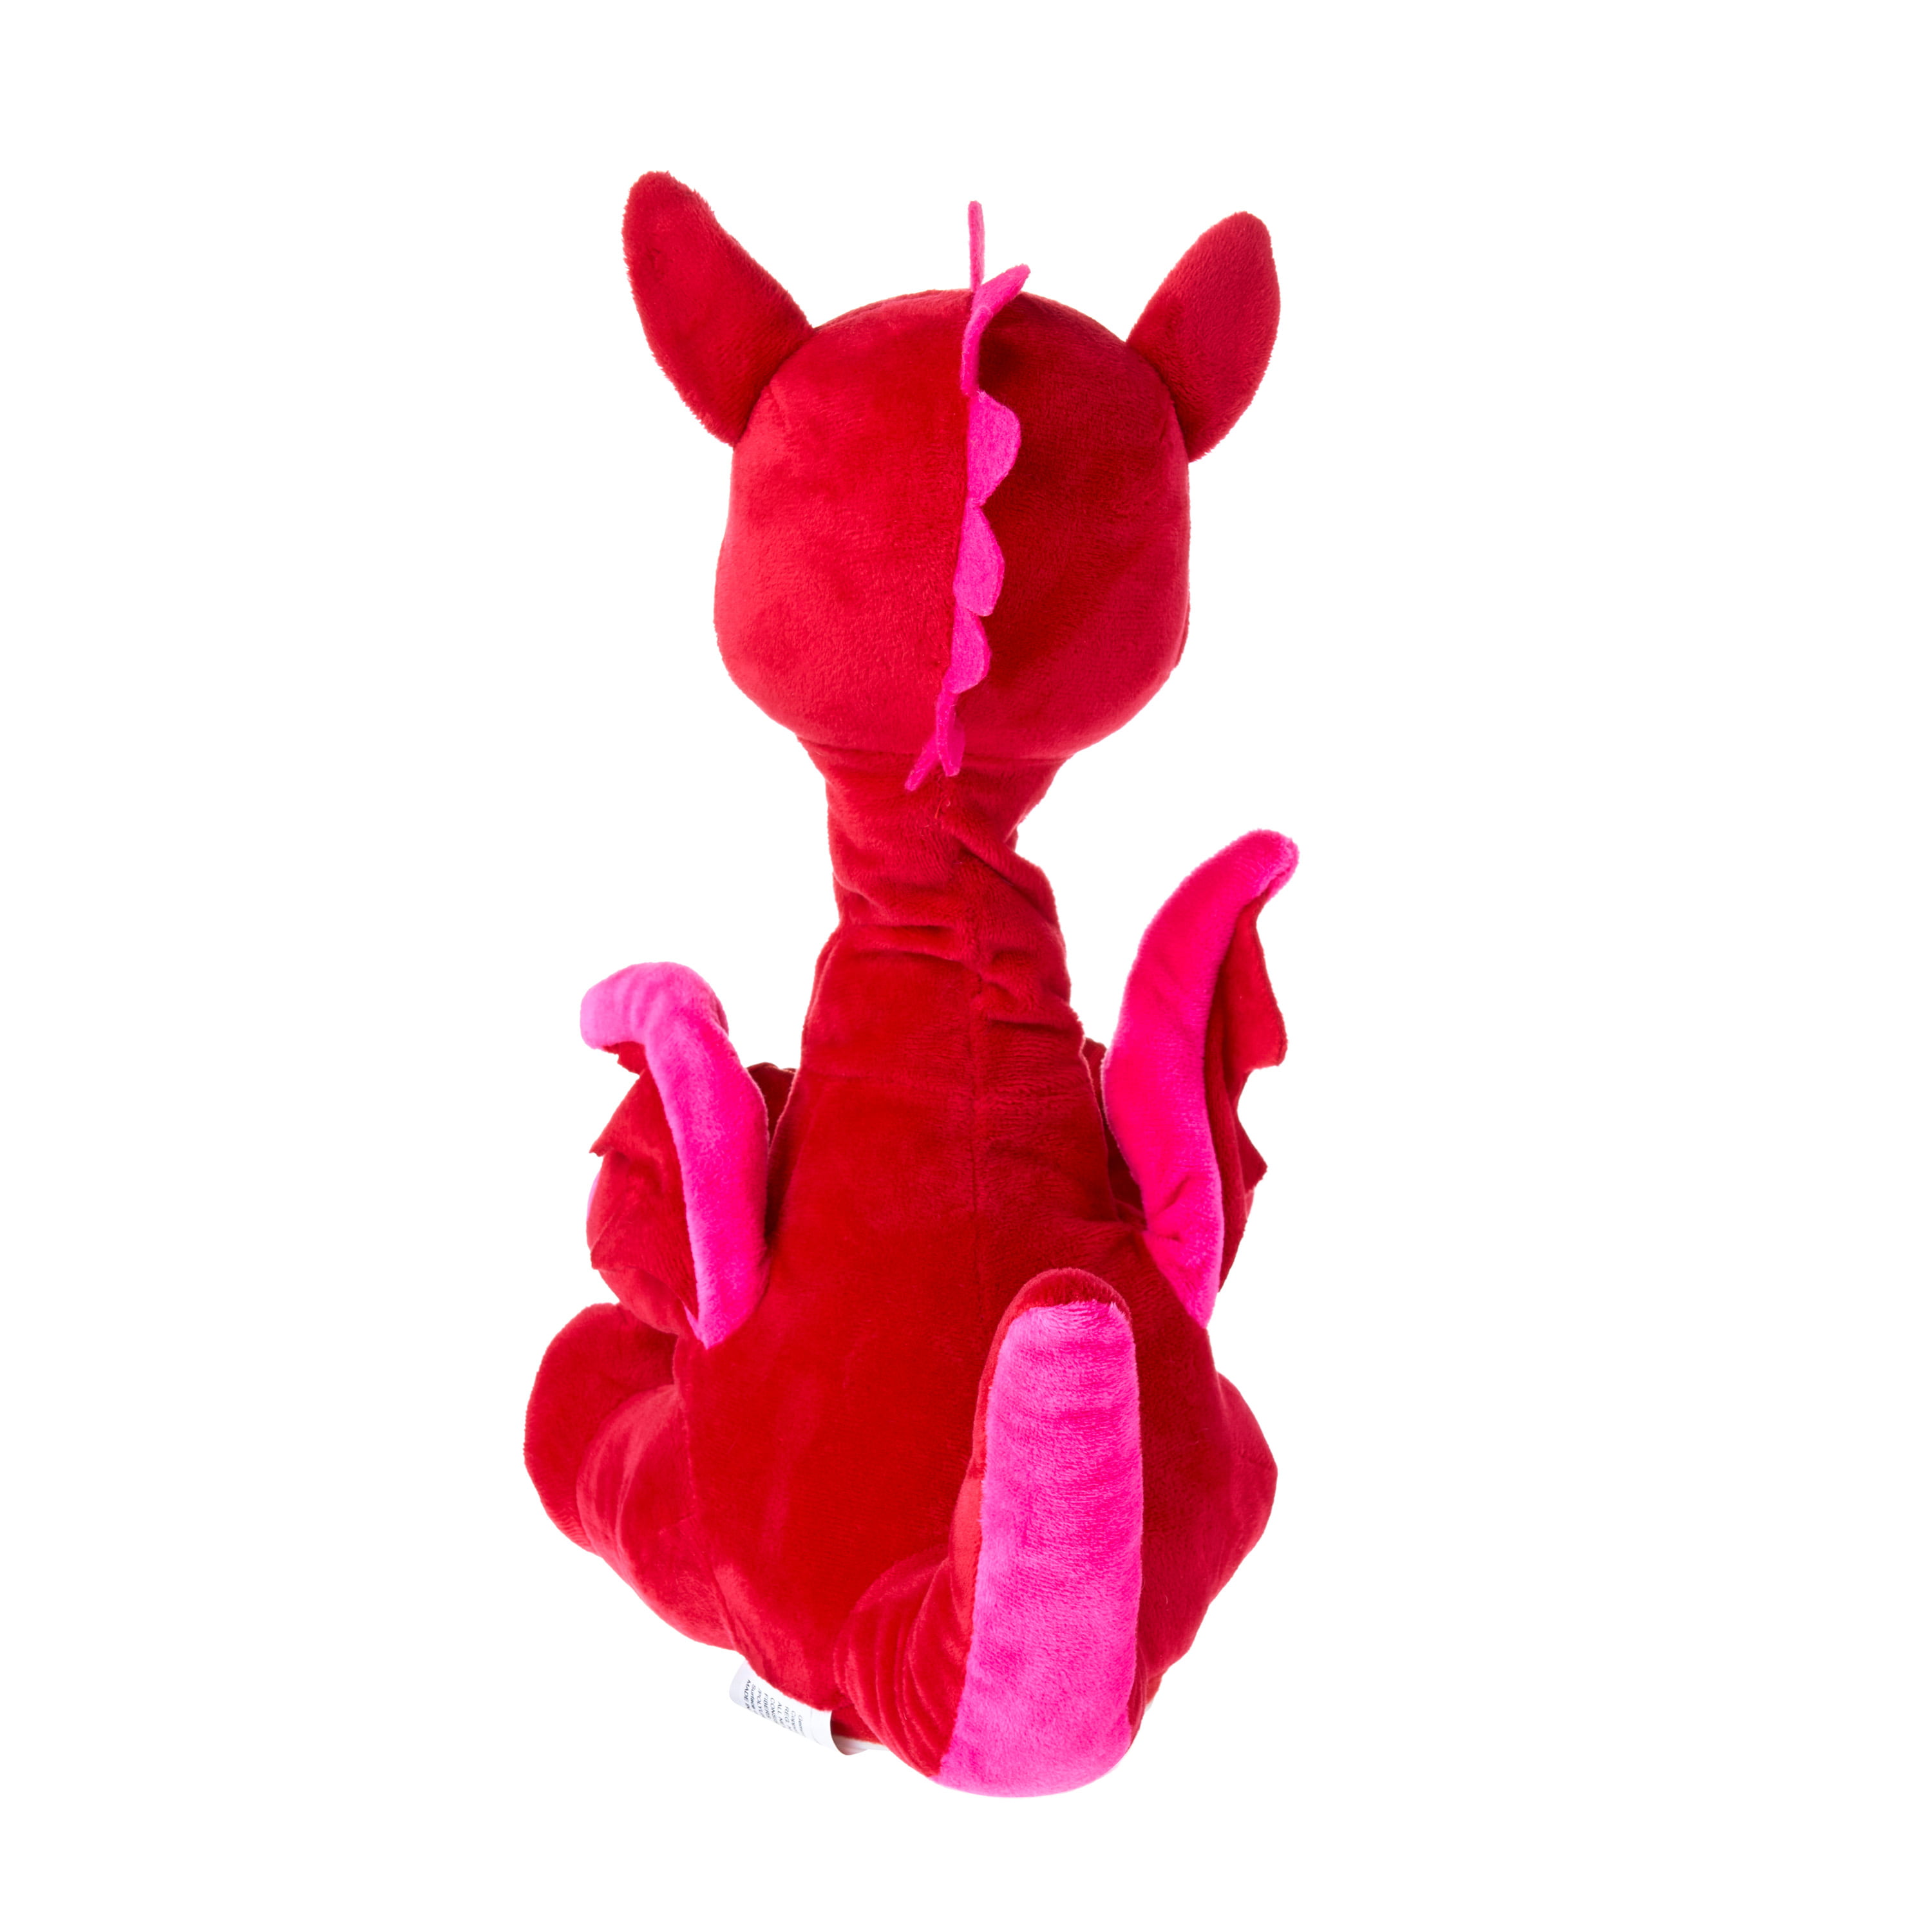 KidsofAmerica Valentines Musical Animated Spinning Dragon Plush Sings and Dances to Fireball Magic Power